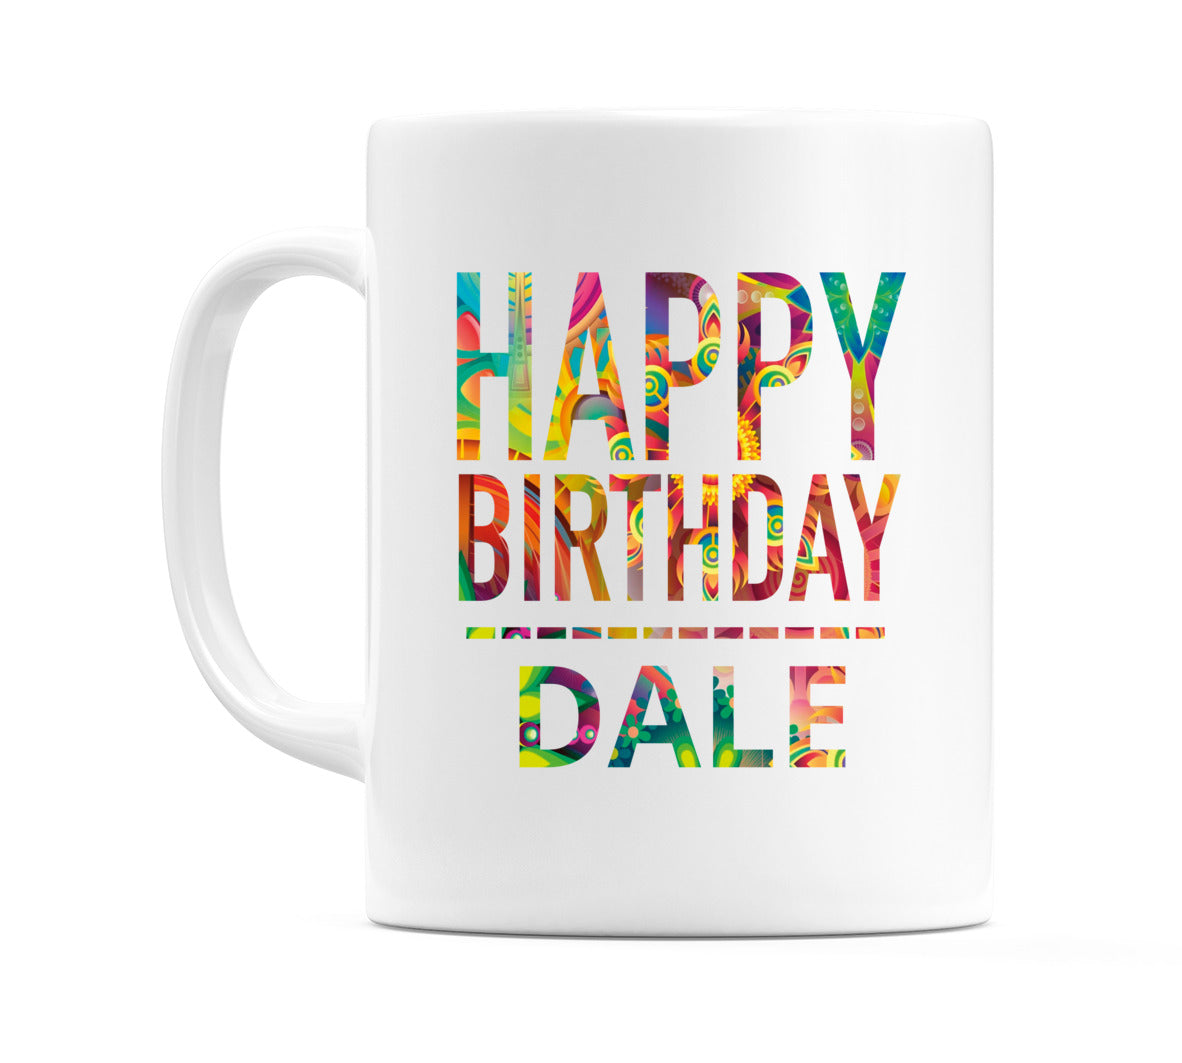 Happy Birthday Dale (Tie Dye Effect) Mug Cup by WeDoMugs